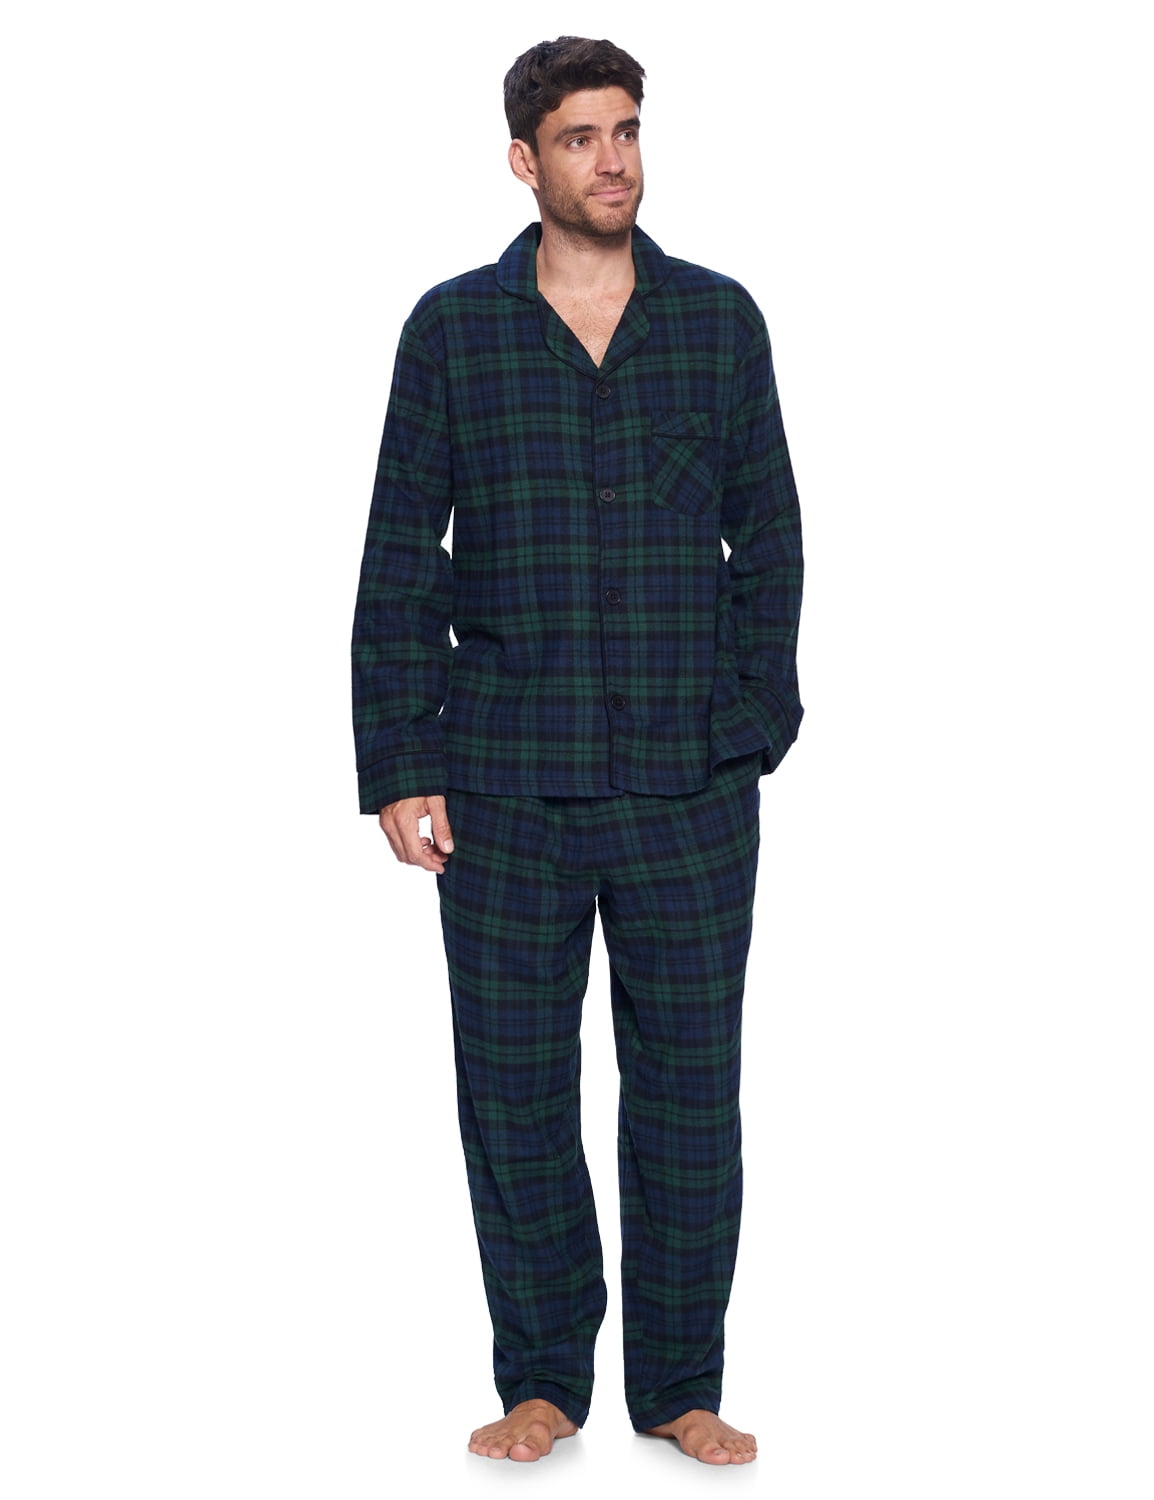 Goodfellow Mens Long Sleeve Woven Green Plaid Pajama Shirt & Pants Set Brand New 